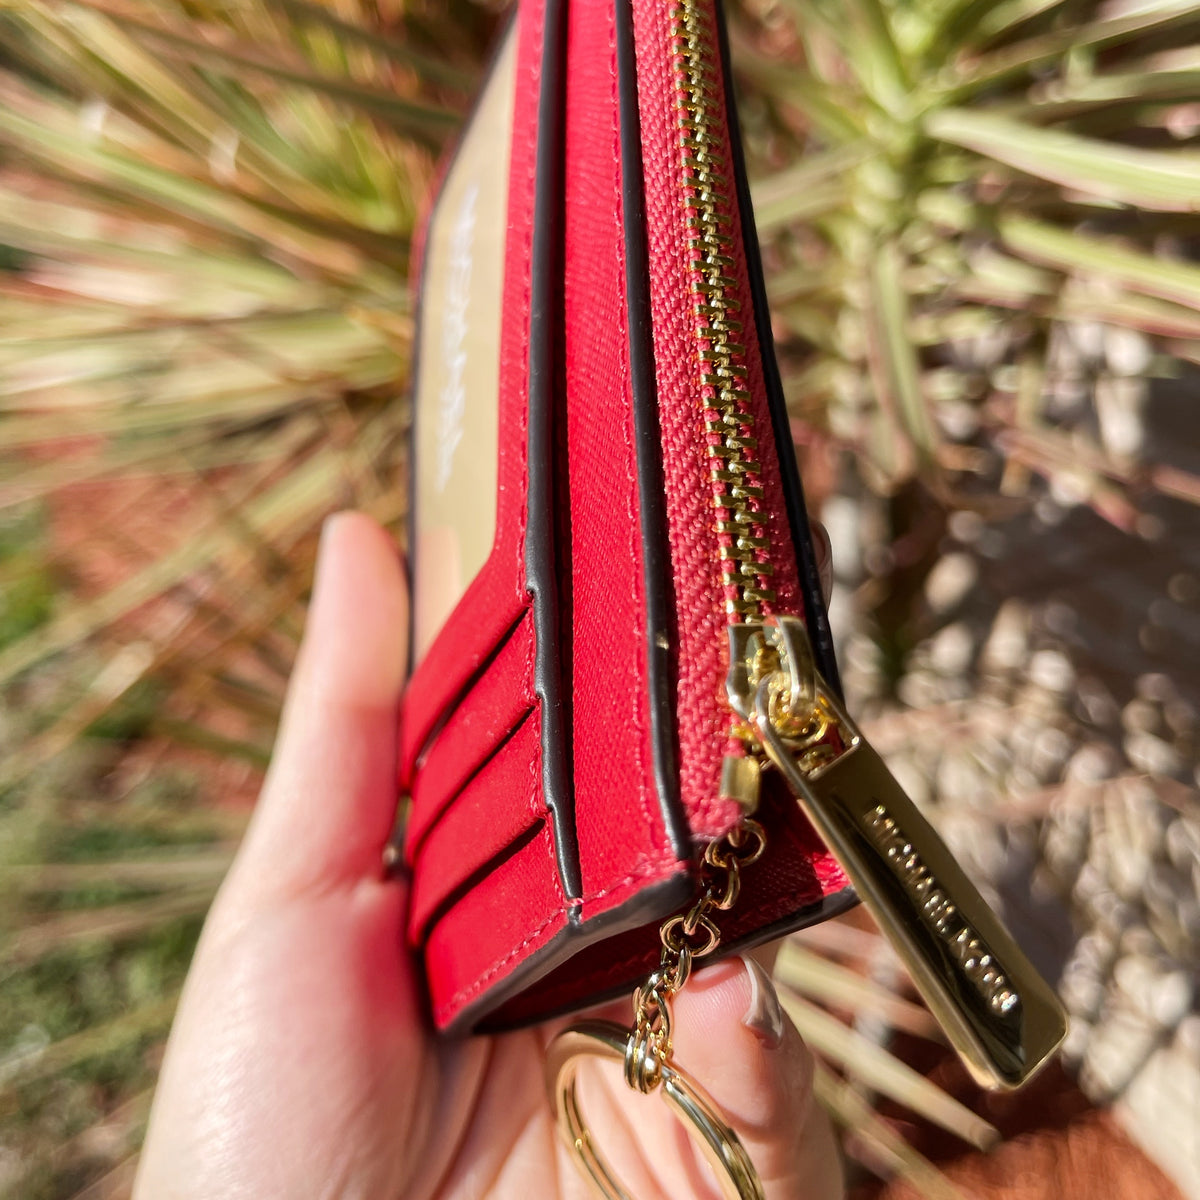 Michael Kors Jet Set Travel Zip Around Card Case Wallet Brown Mk Flame Red